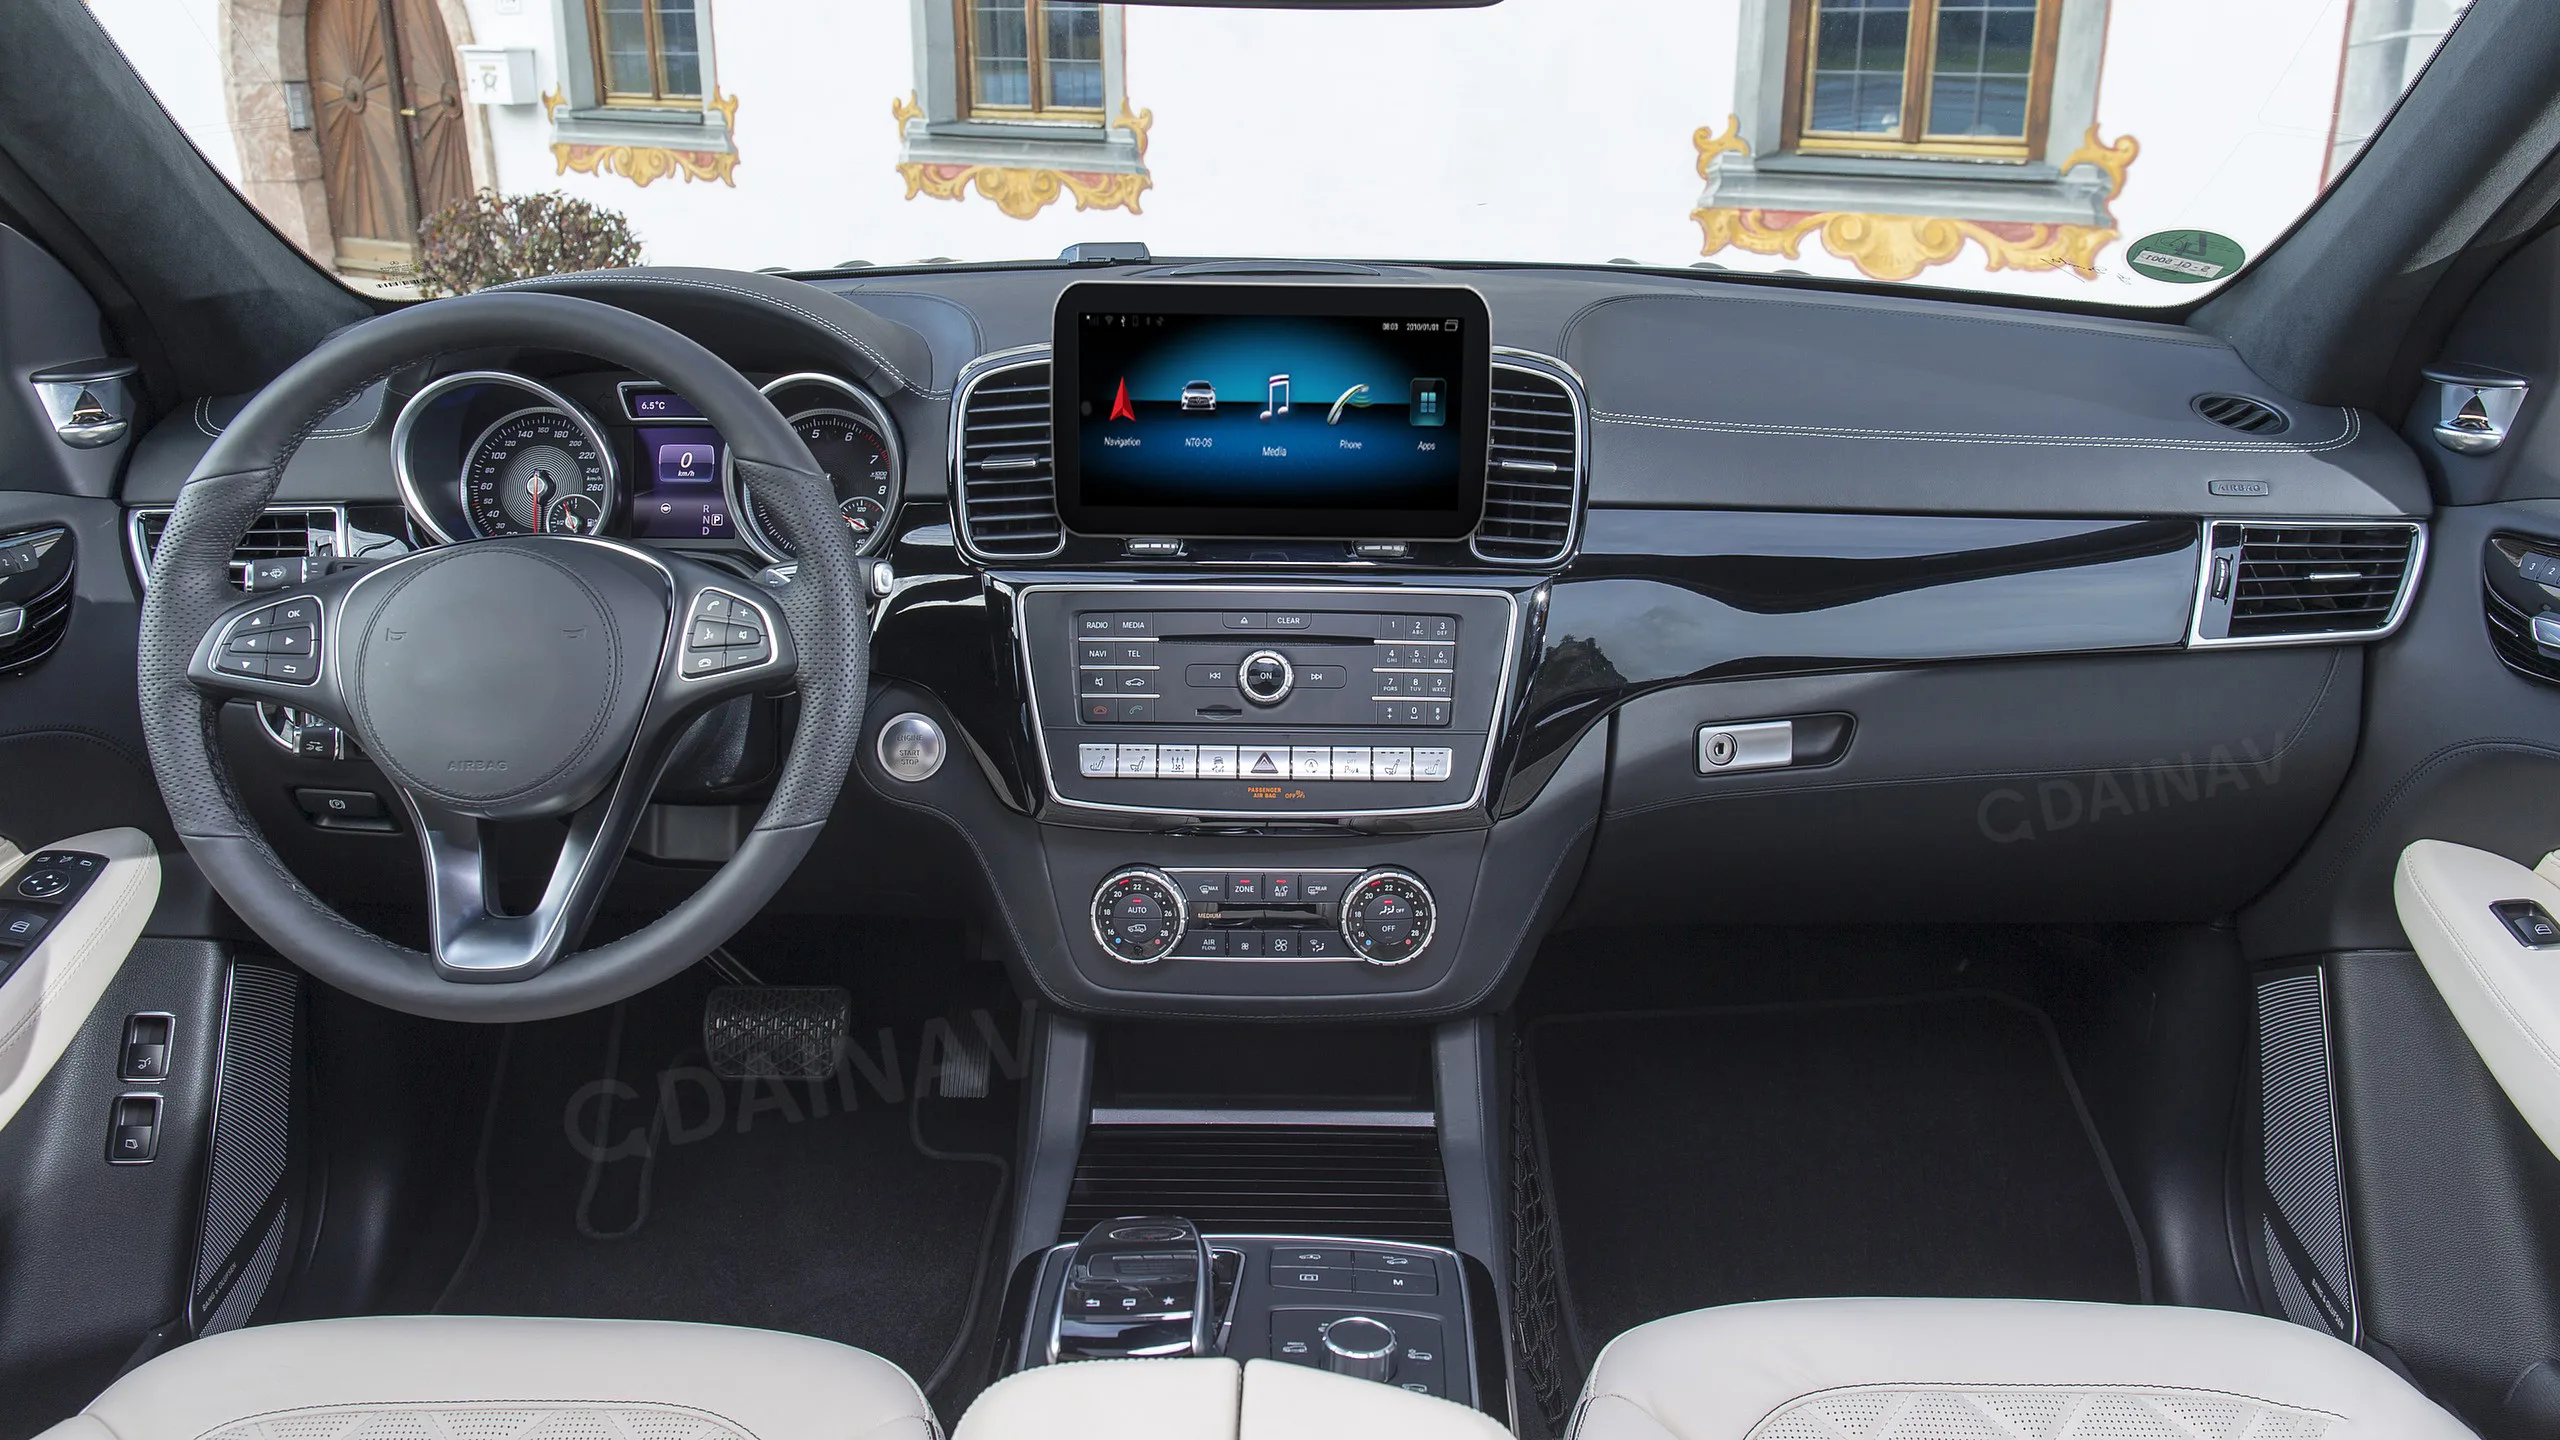 Gls салон. Mercedes-Benz GLS 400. Mercedes-Benz gl Interior 2016. Mercedes Benz GLS 2017 Interior. Mercedes GLS 400 4 matic Interior.